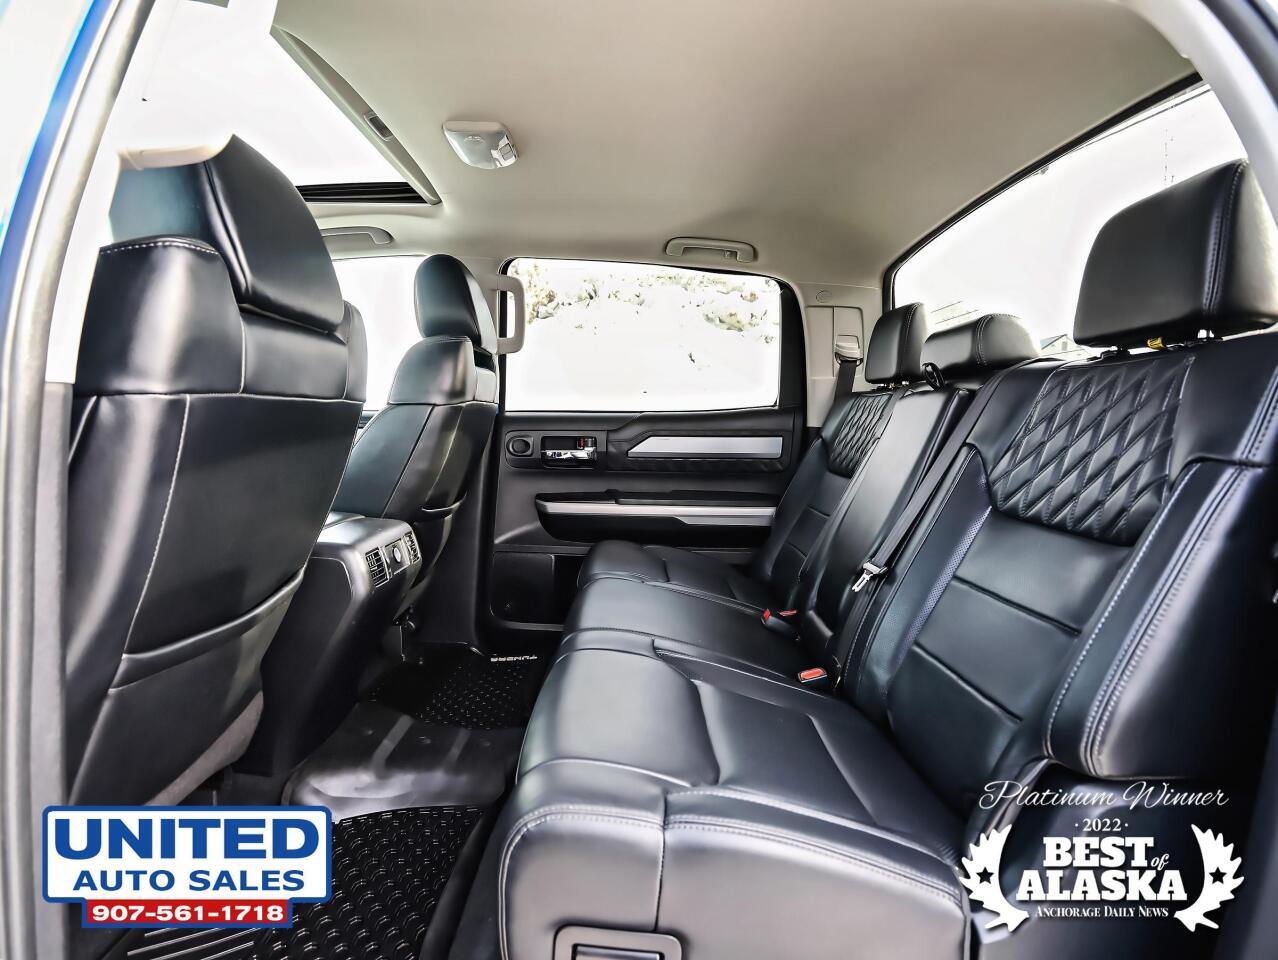 2018 Toyota Tundra Platinum 4x4 4dr CrewMax Cab Pickup SB (5.7L V8) 14